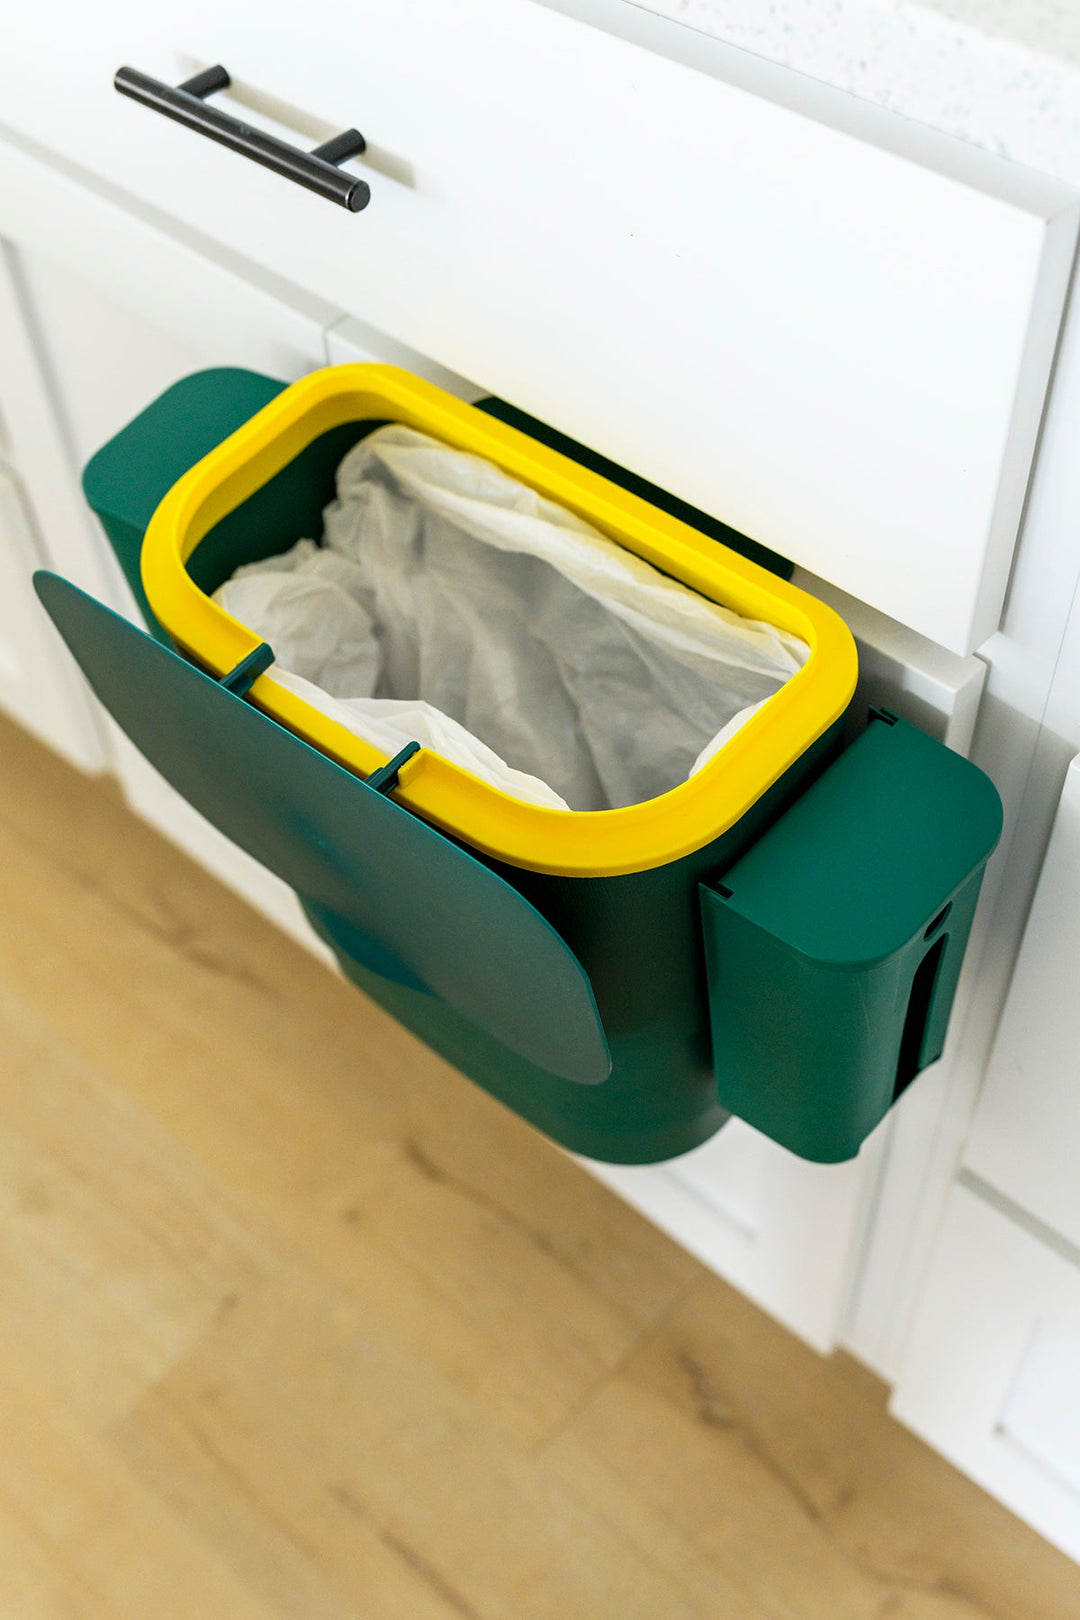 Food Prep Sidekick, mini waste can with side bag storage